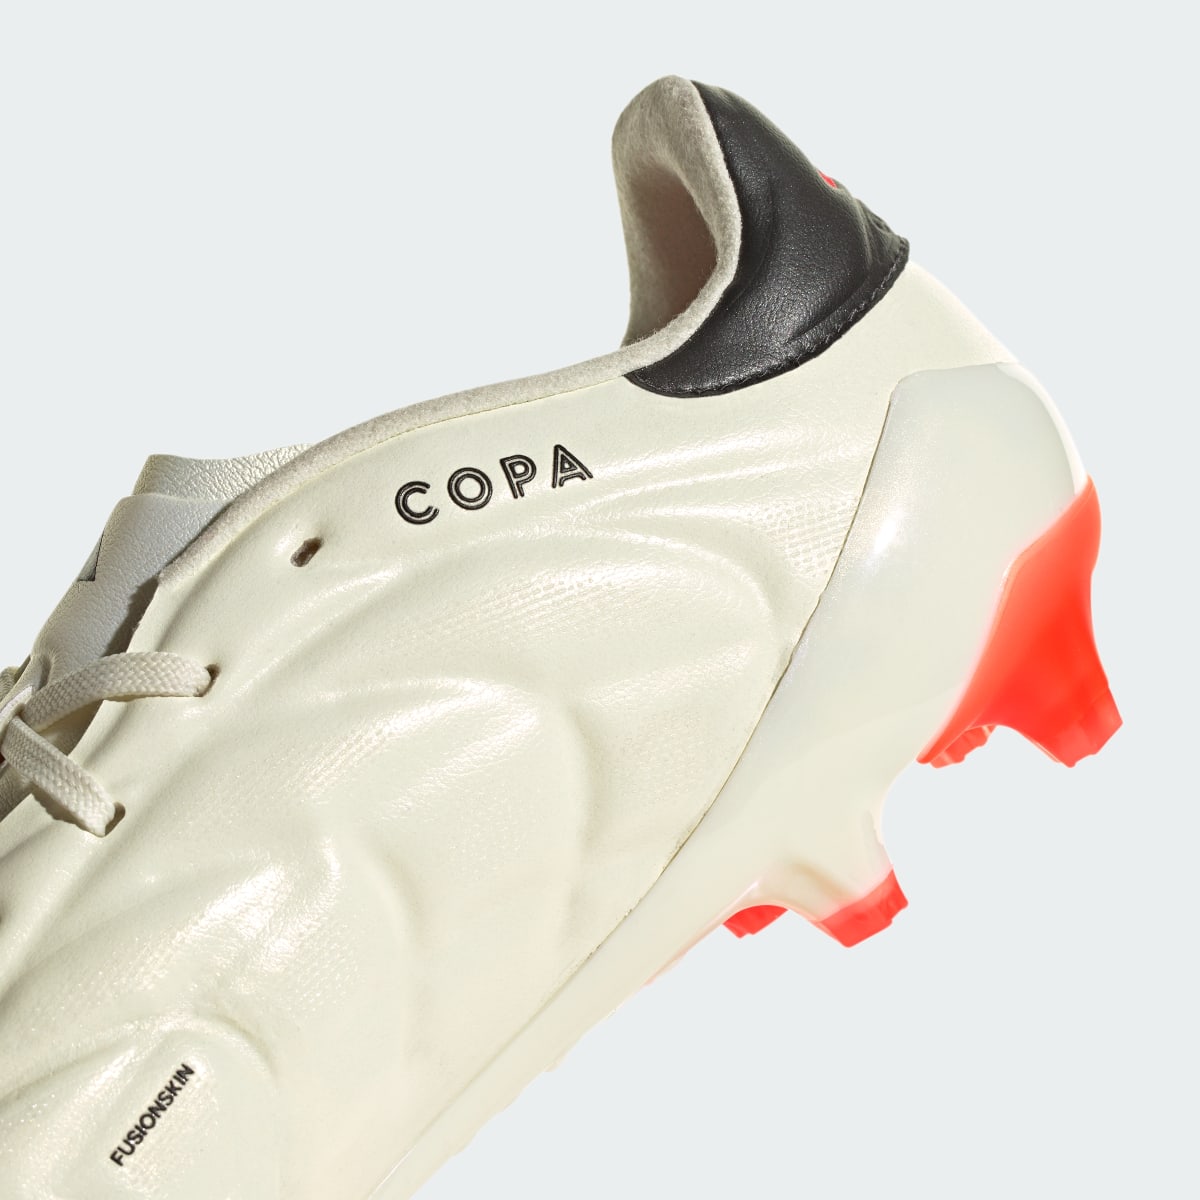 Adidas Copa Pure II Elite Artificial Grass Boots. 4